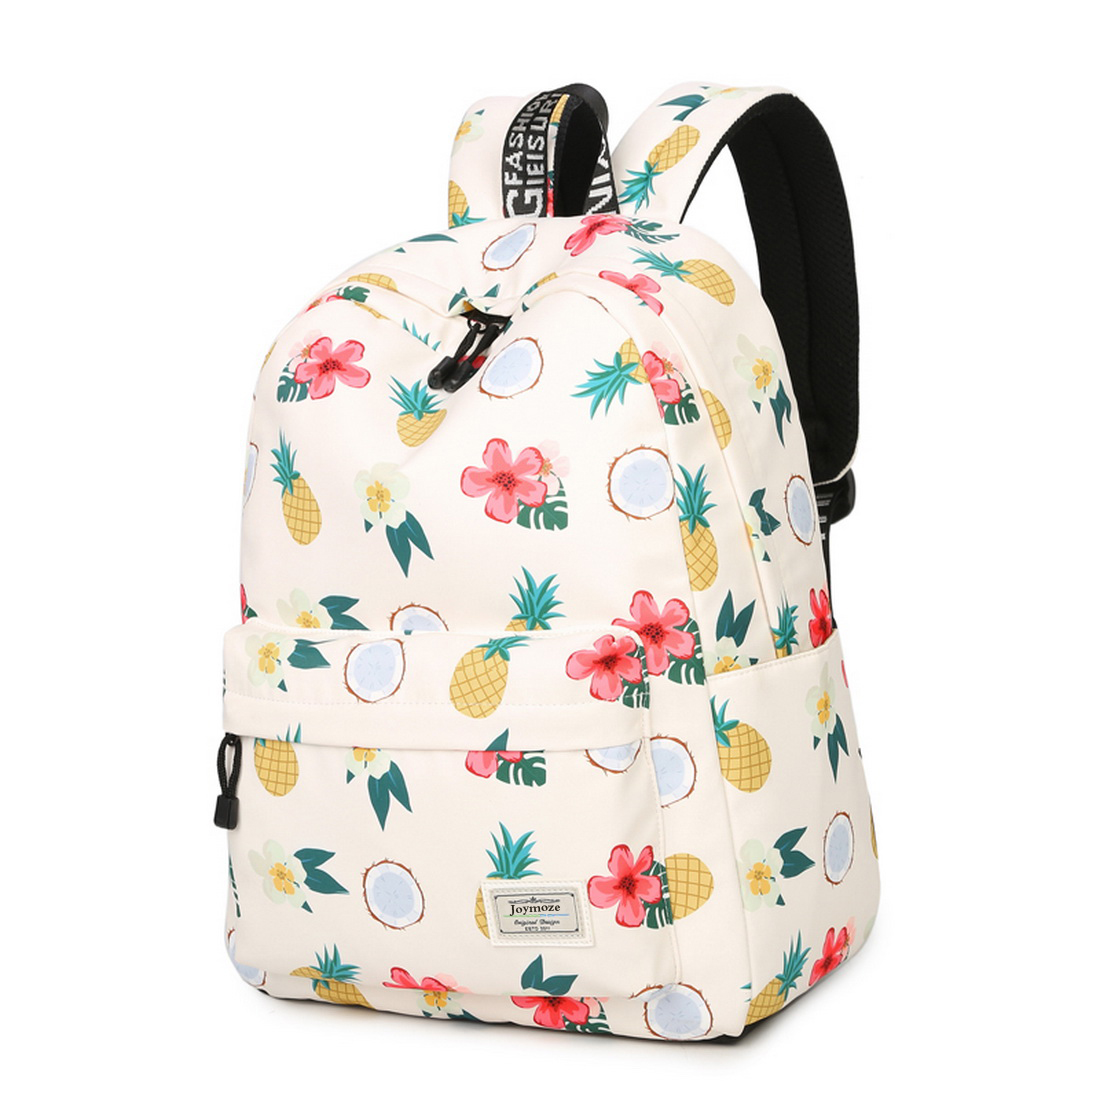 Joymoze Girl\'s Water-Proof School Backpack for Middle School Cute Bookbag Daypack for Women Fruit 843